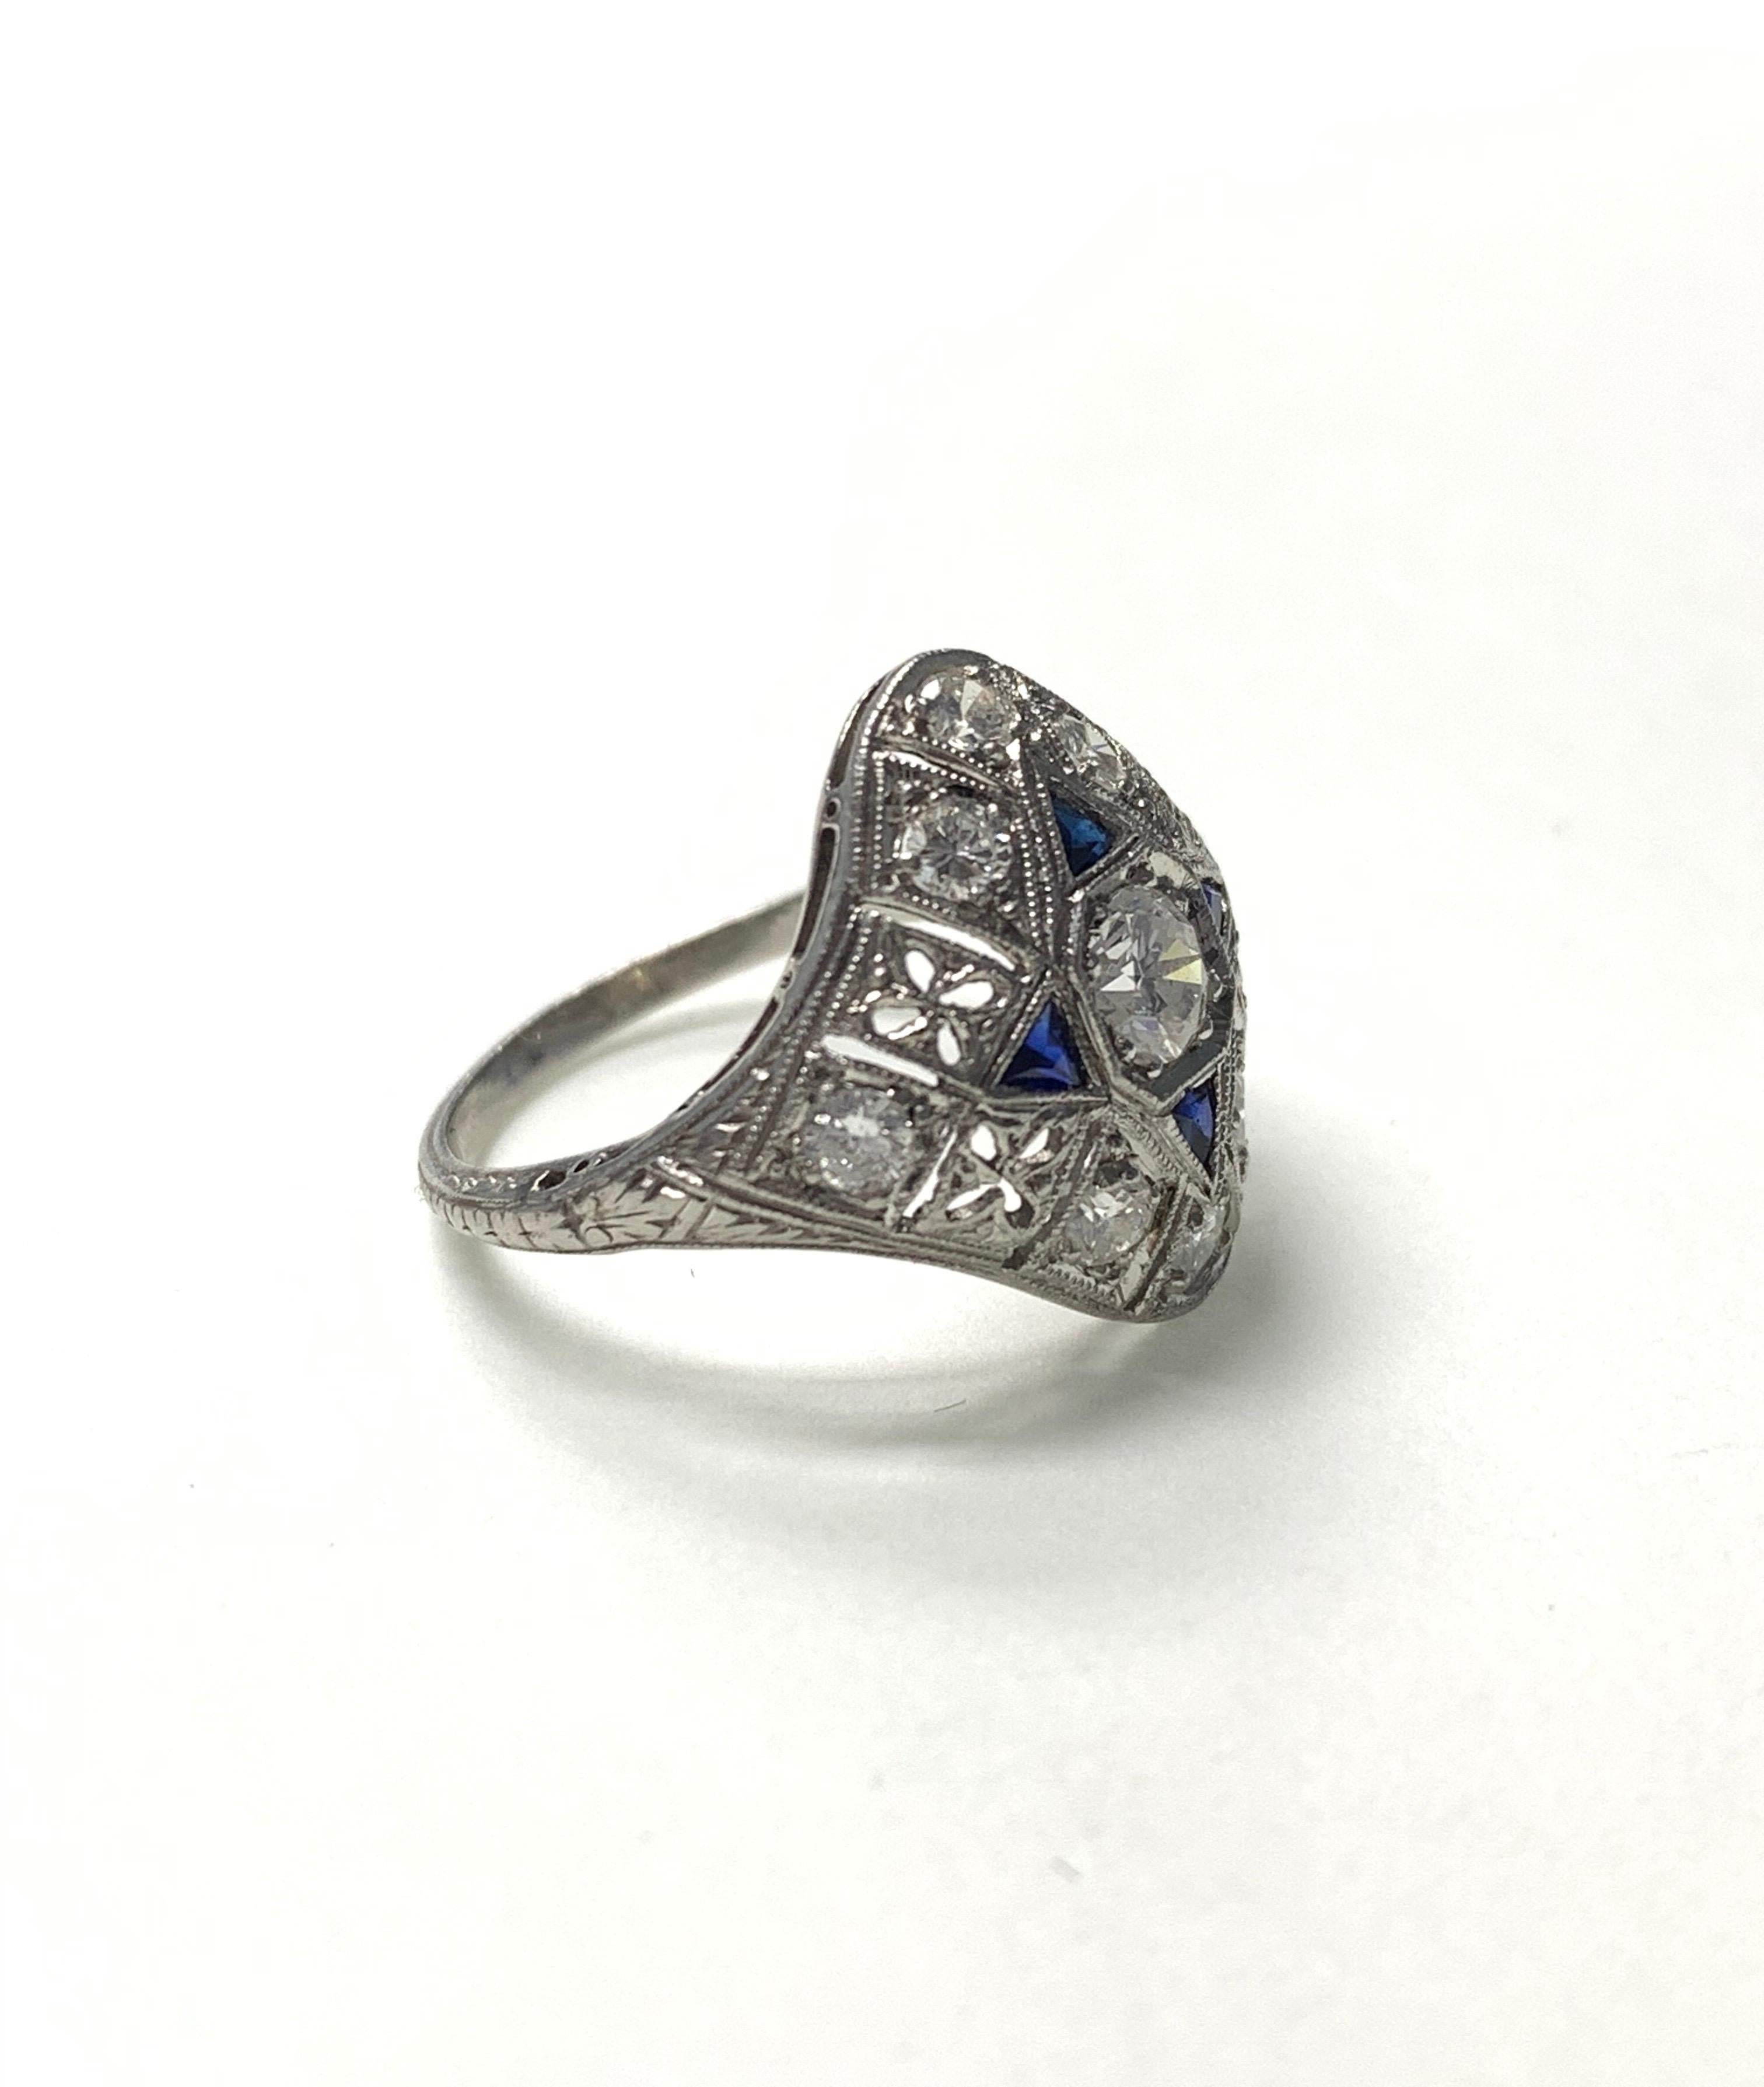 Antique 1920 White Old European Cut Diamond and Blue Sapphire Ring in Platinum 3